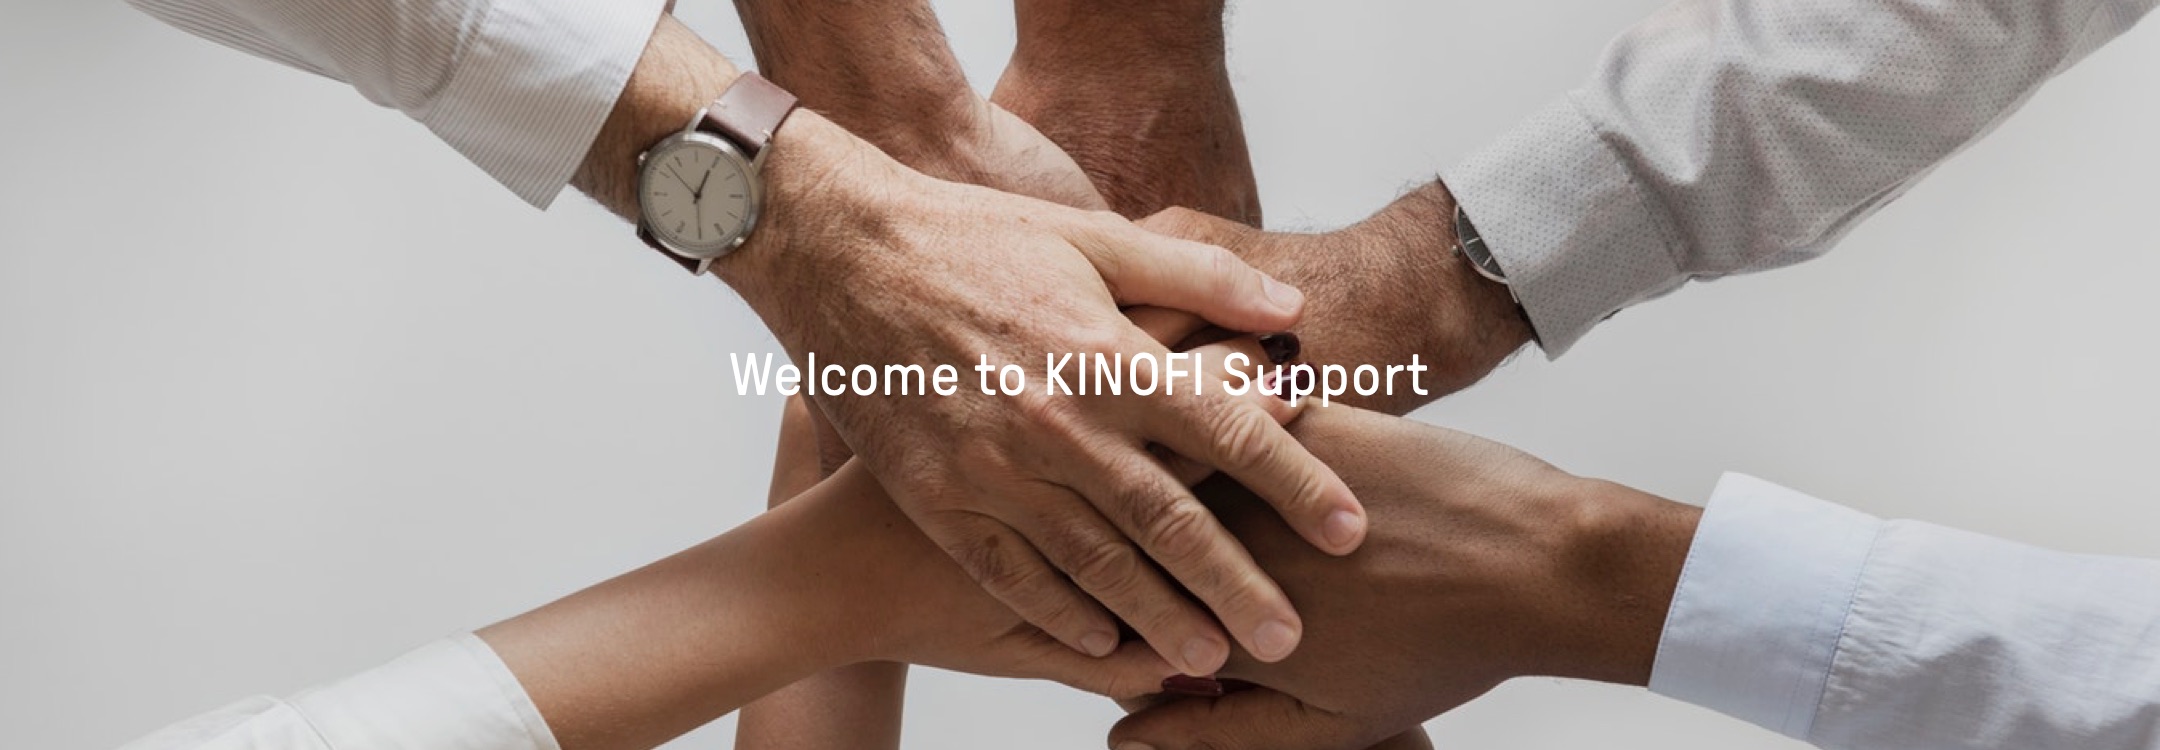 , Support, Innoplay Kinofi